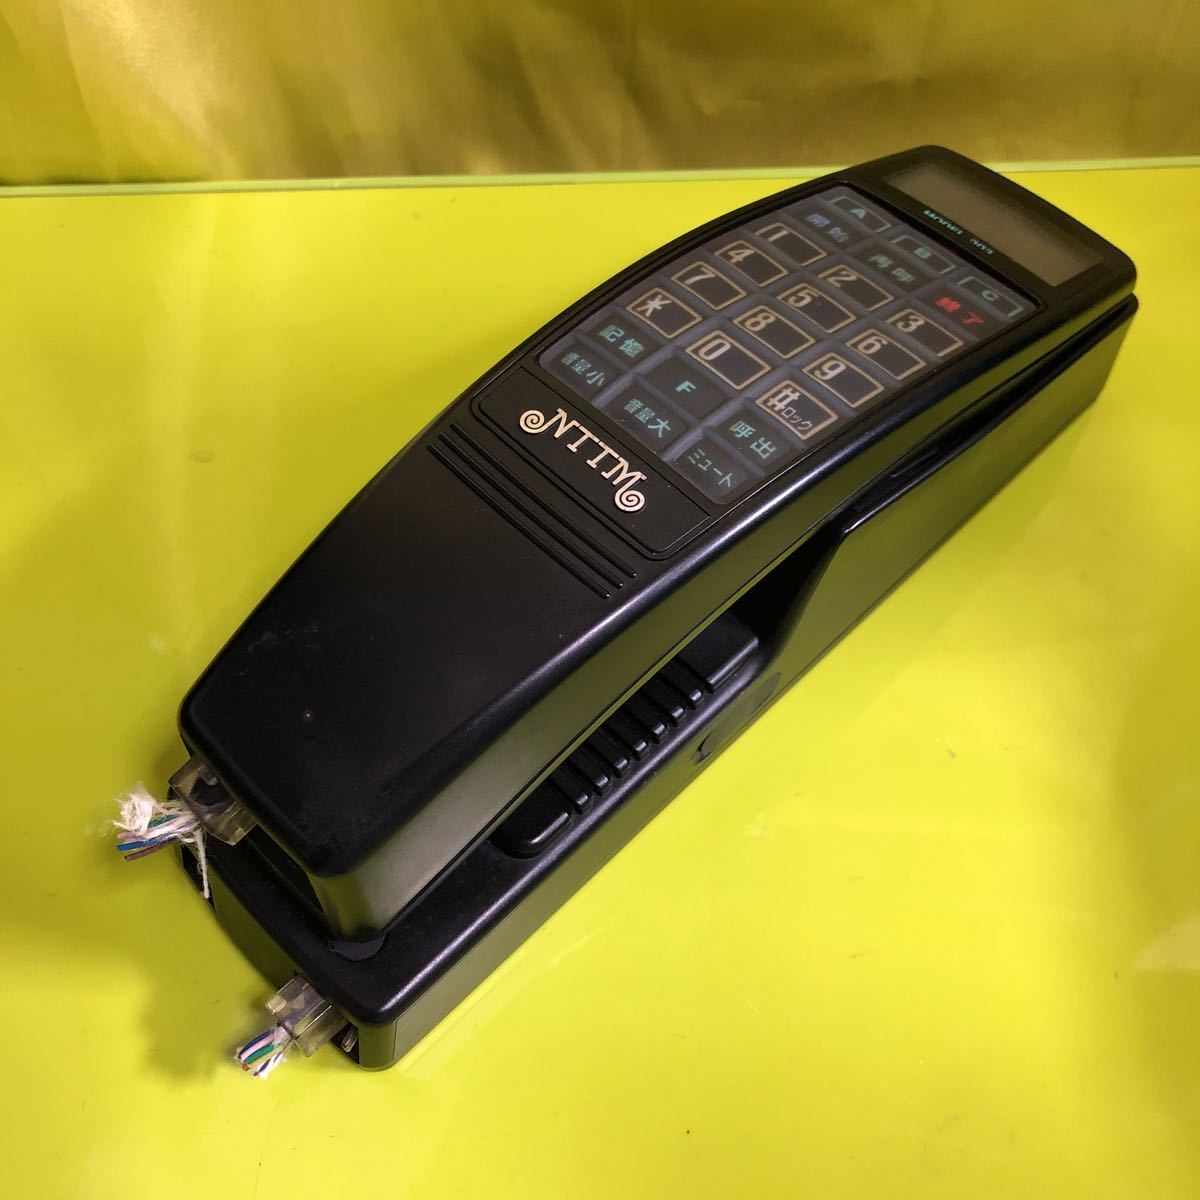 Yahoo!オークション - 自動車電話 NTT 203/203B形 1990年富士通製...